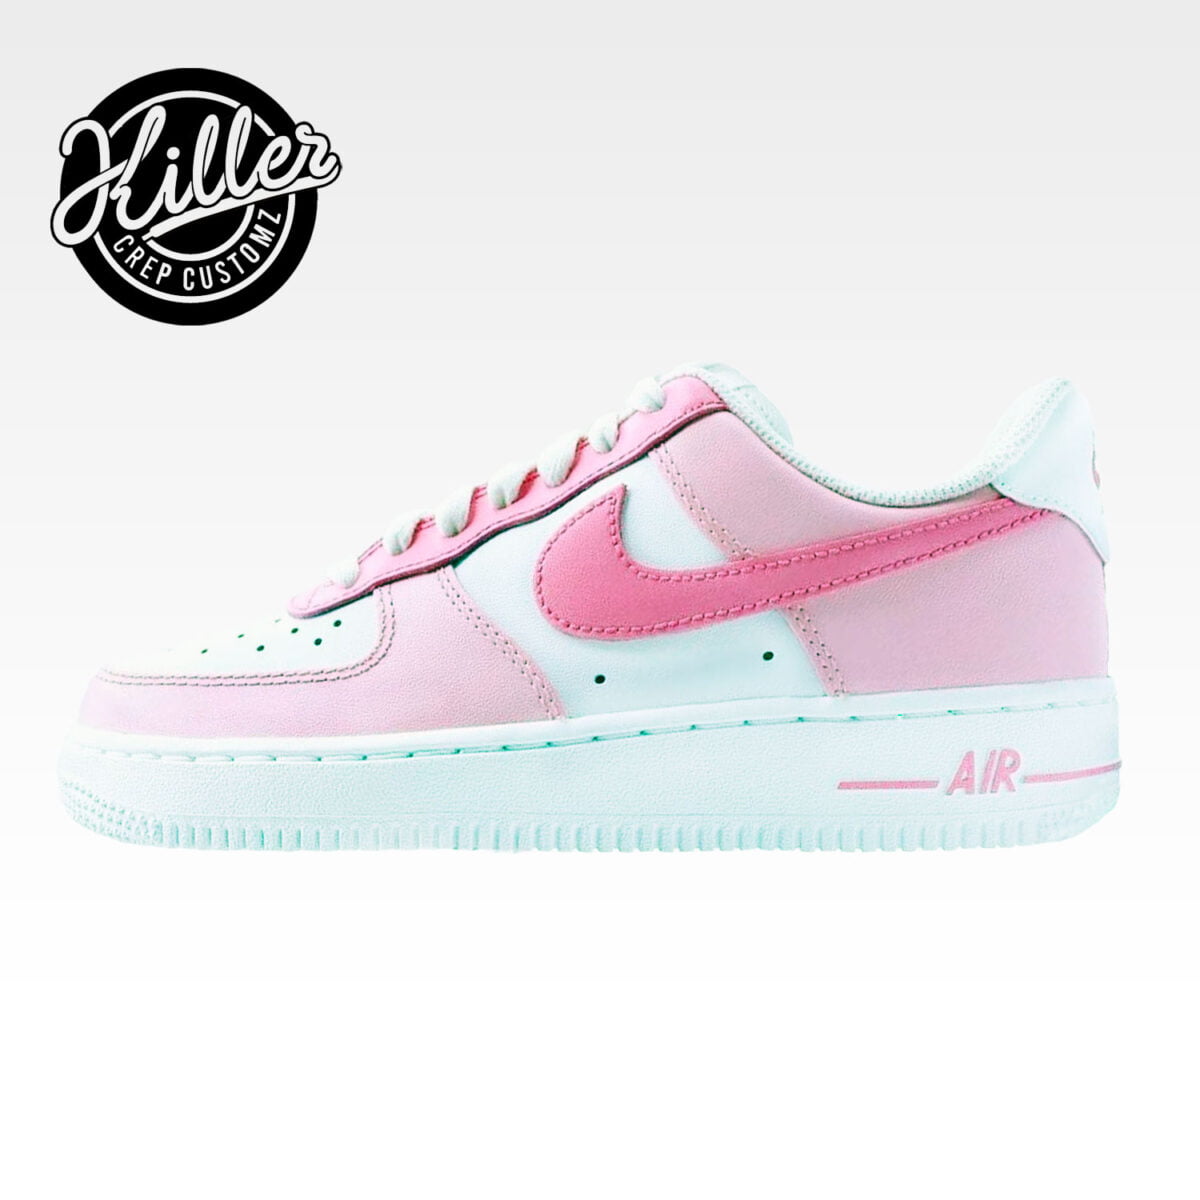 Custom Nike Air Force 1 - Baby Pink Colourway - Killer Crep Customz